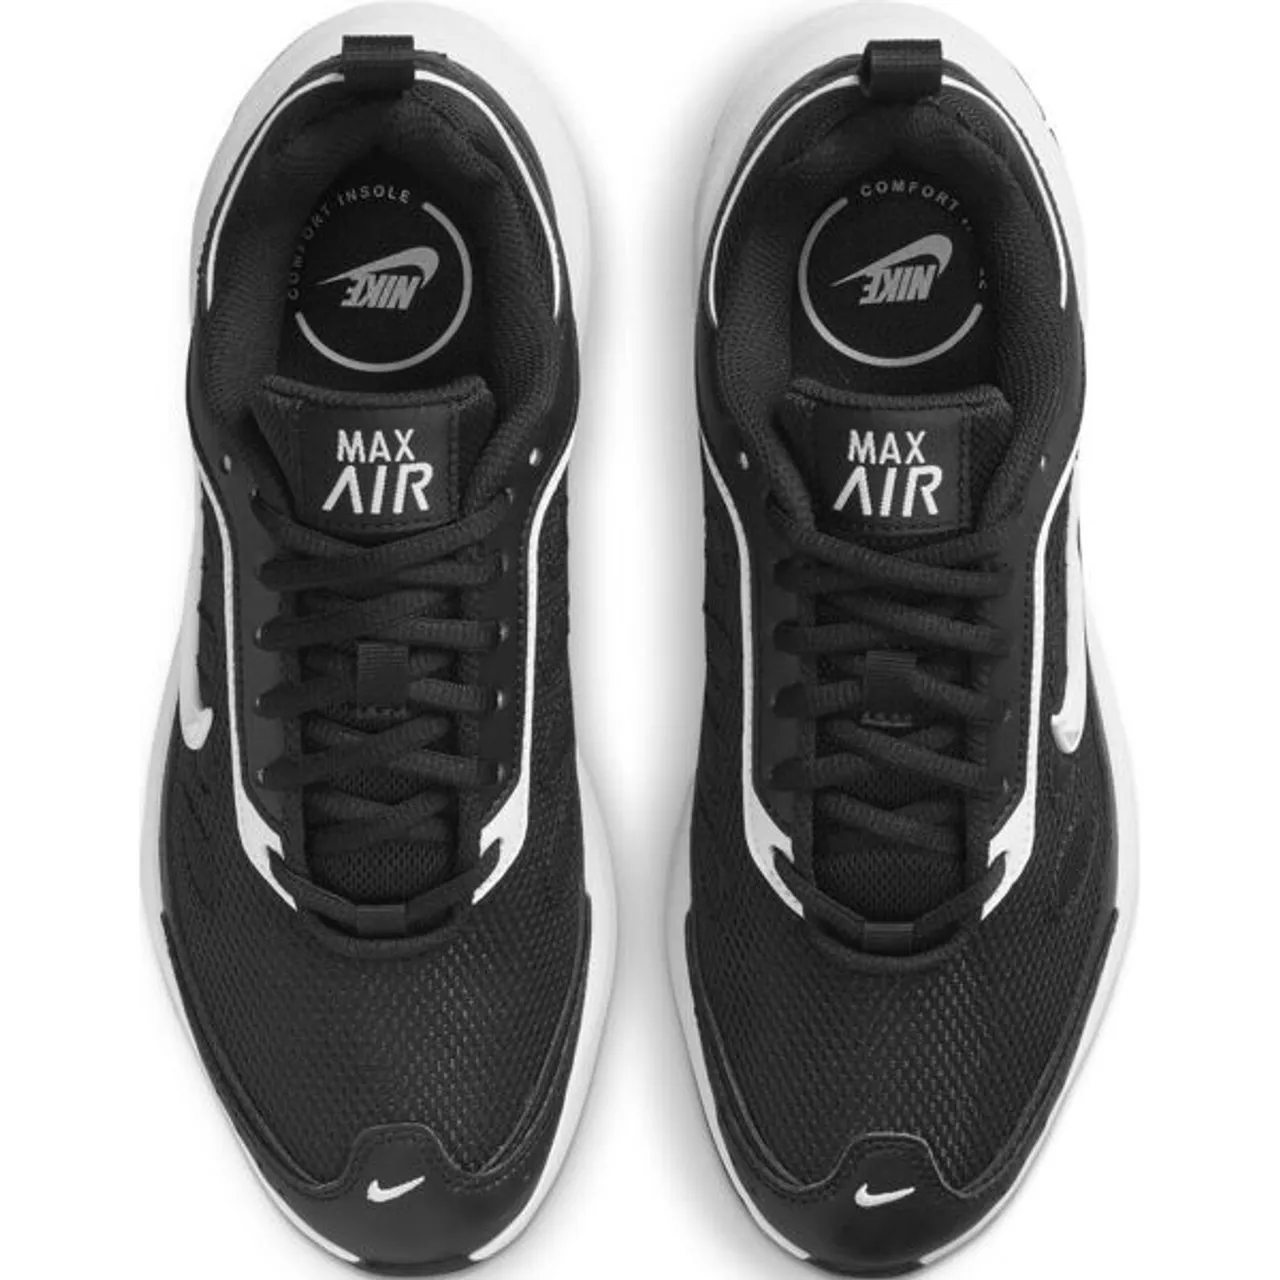 Sneaker NIKE SPORTSWEAR "AIR MAX AP" Gr. 39, schwarz-weiß (black, white, black) Schuhe Sneaker